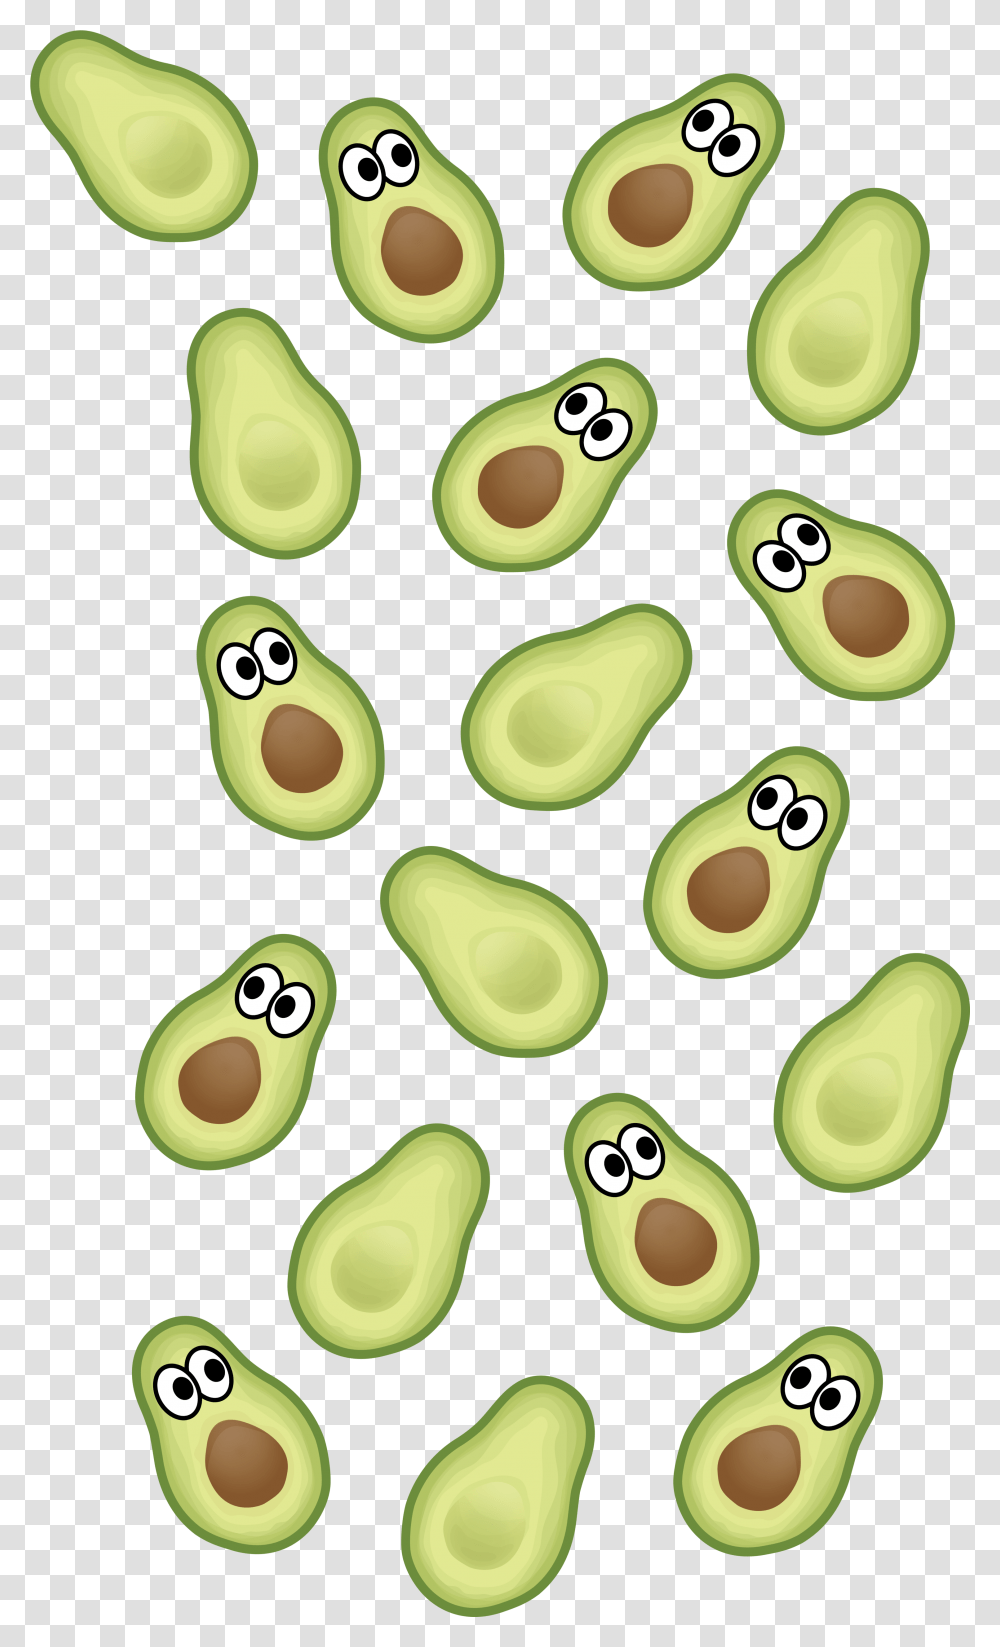 Download Avocado Wallpaper Cute Backgrounds For Iphones Avocado, Plant, Green, Food, Vegetation Transparent Png